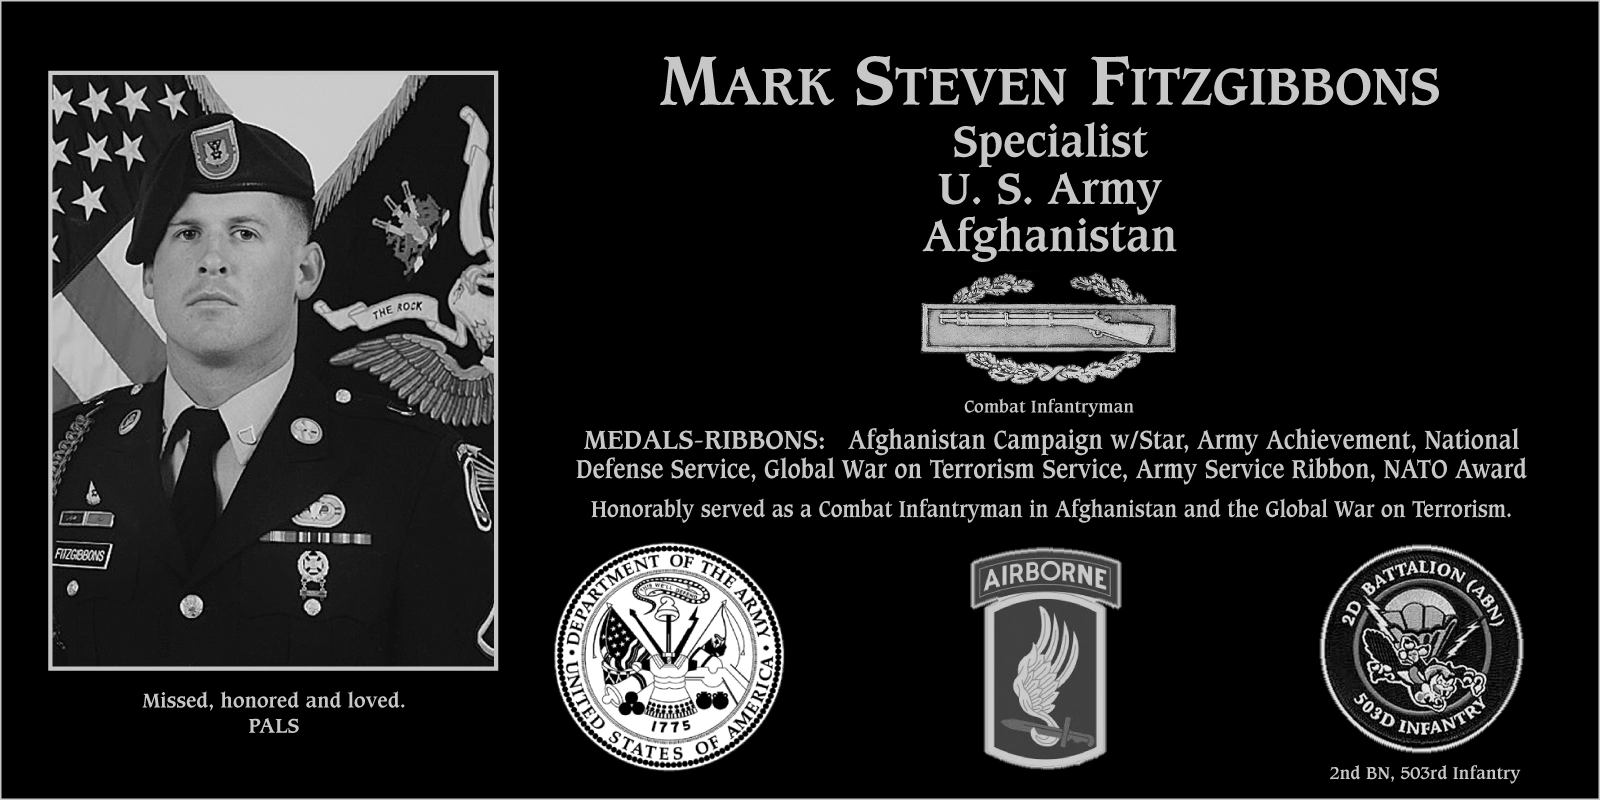 Mark Steven Fitzgibbons